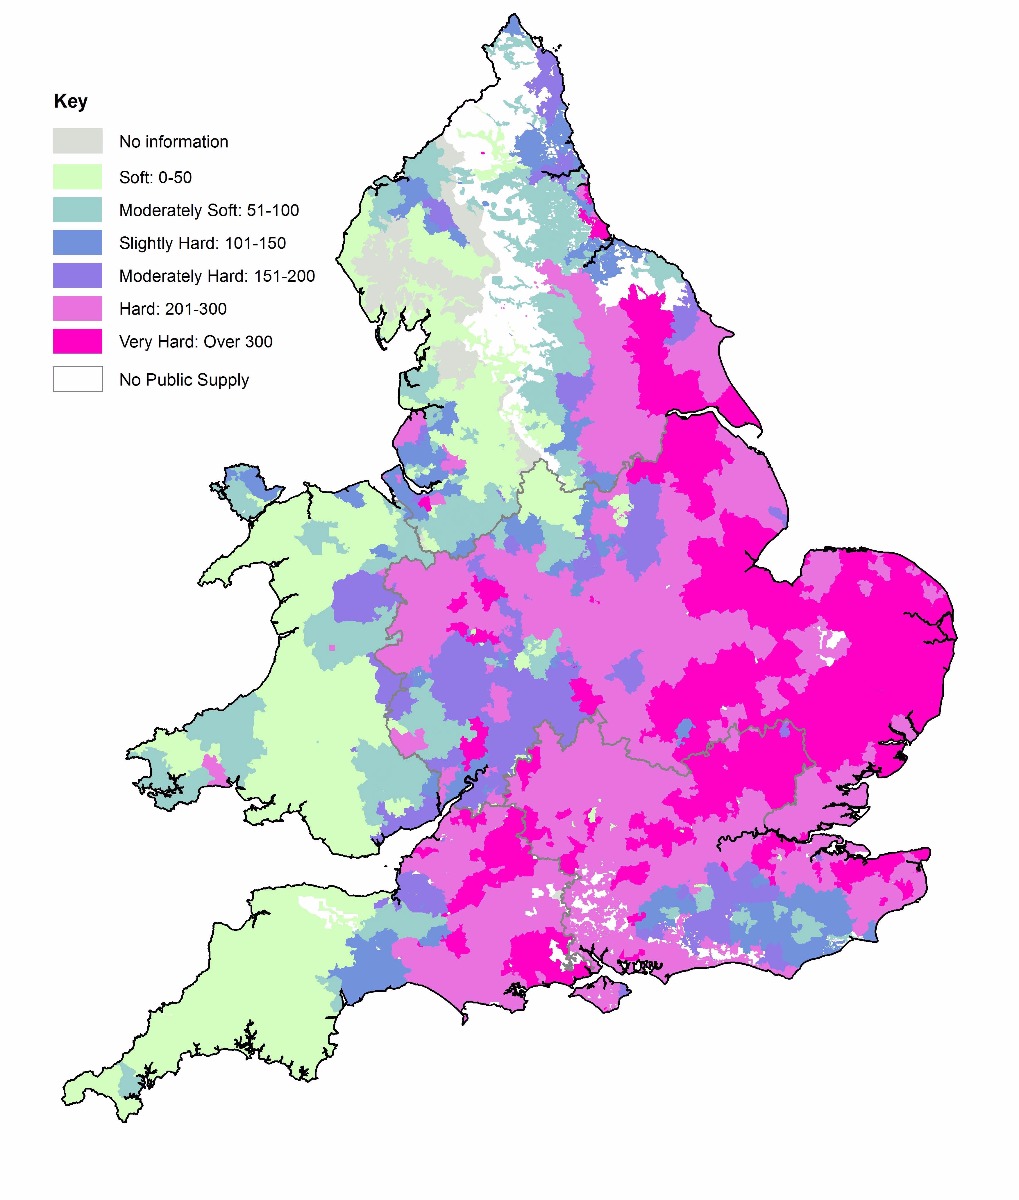 Hard Water Areas UK Map